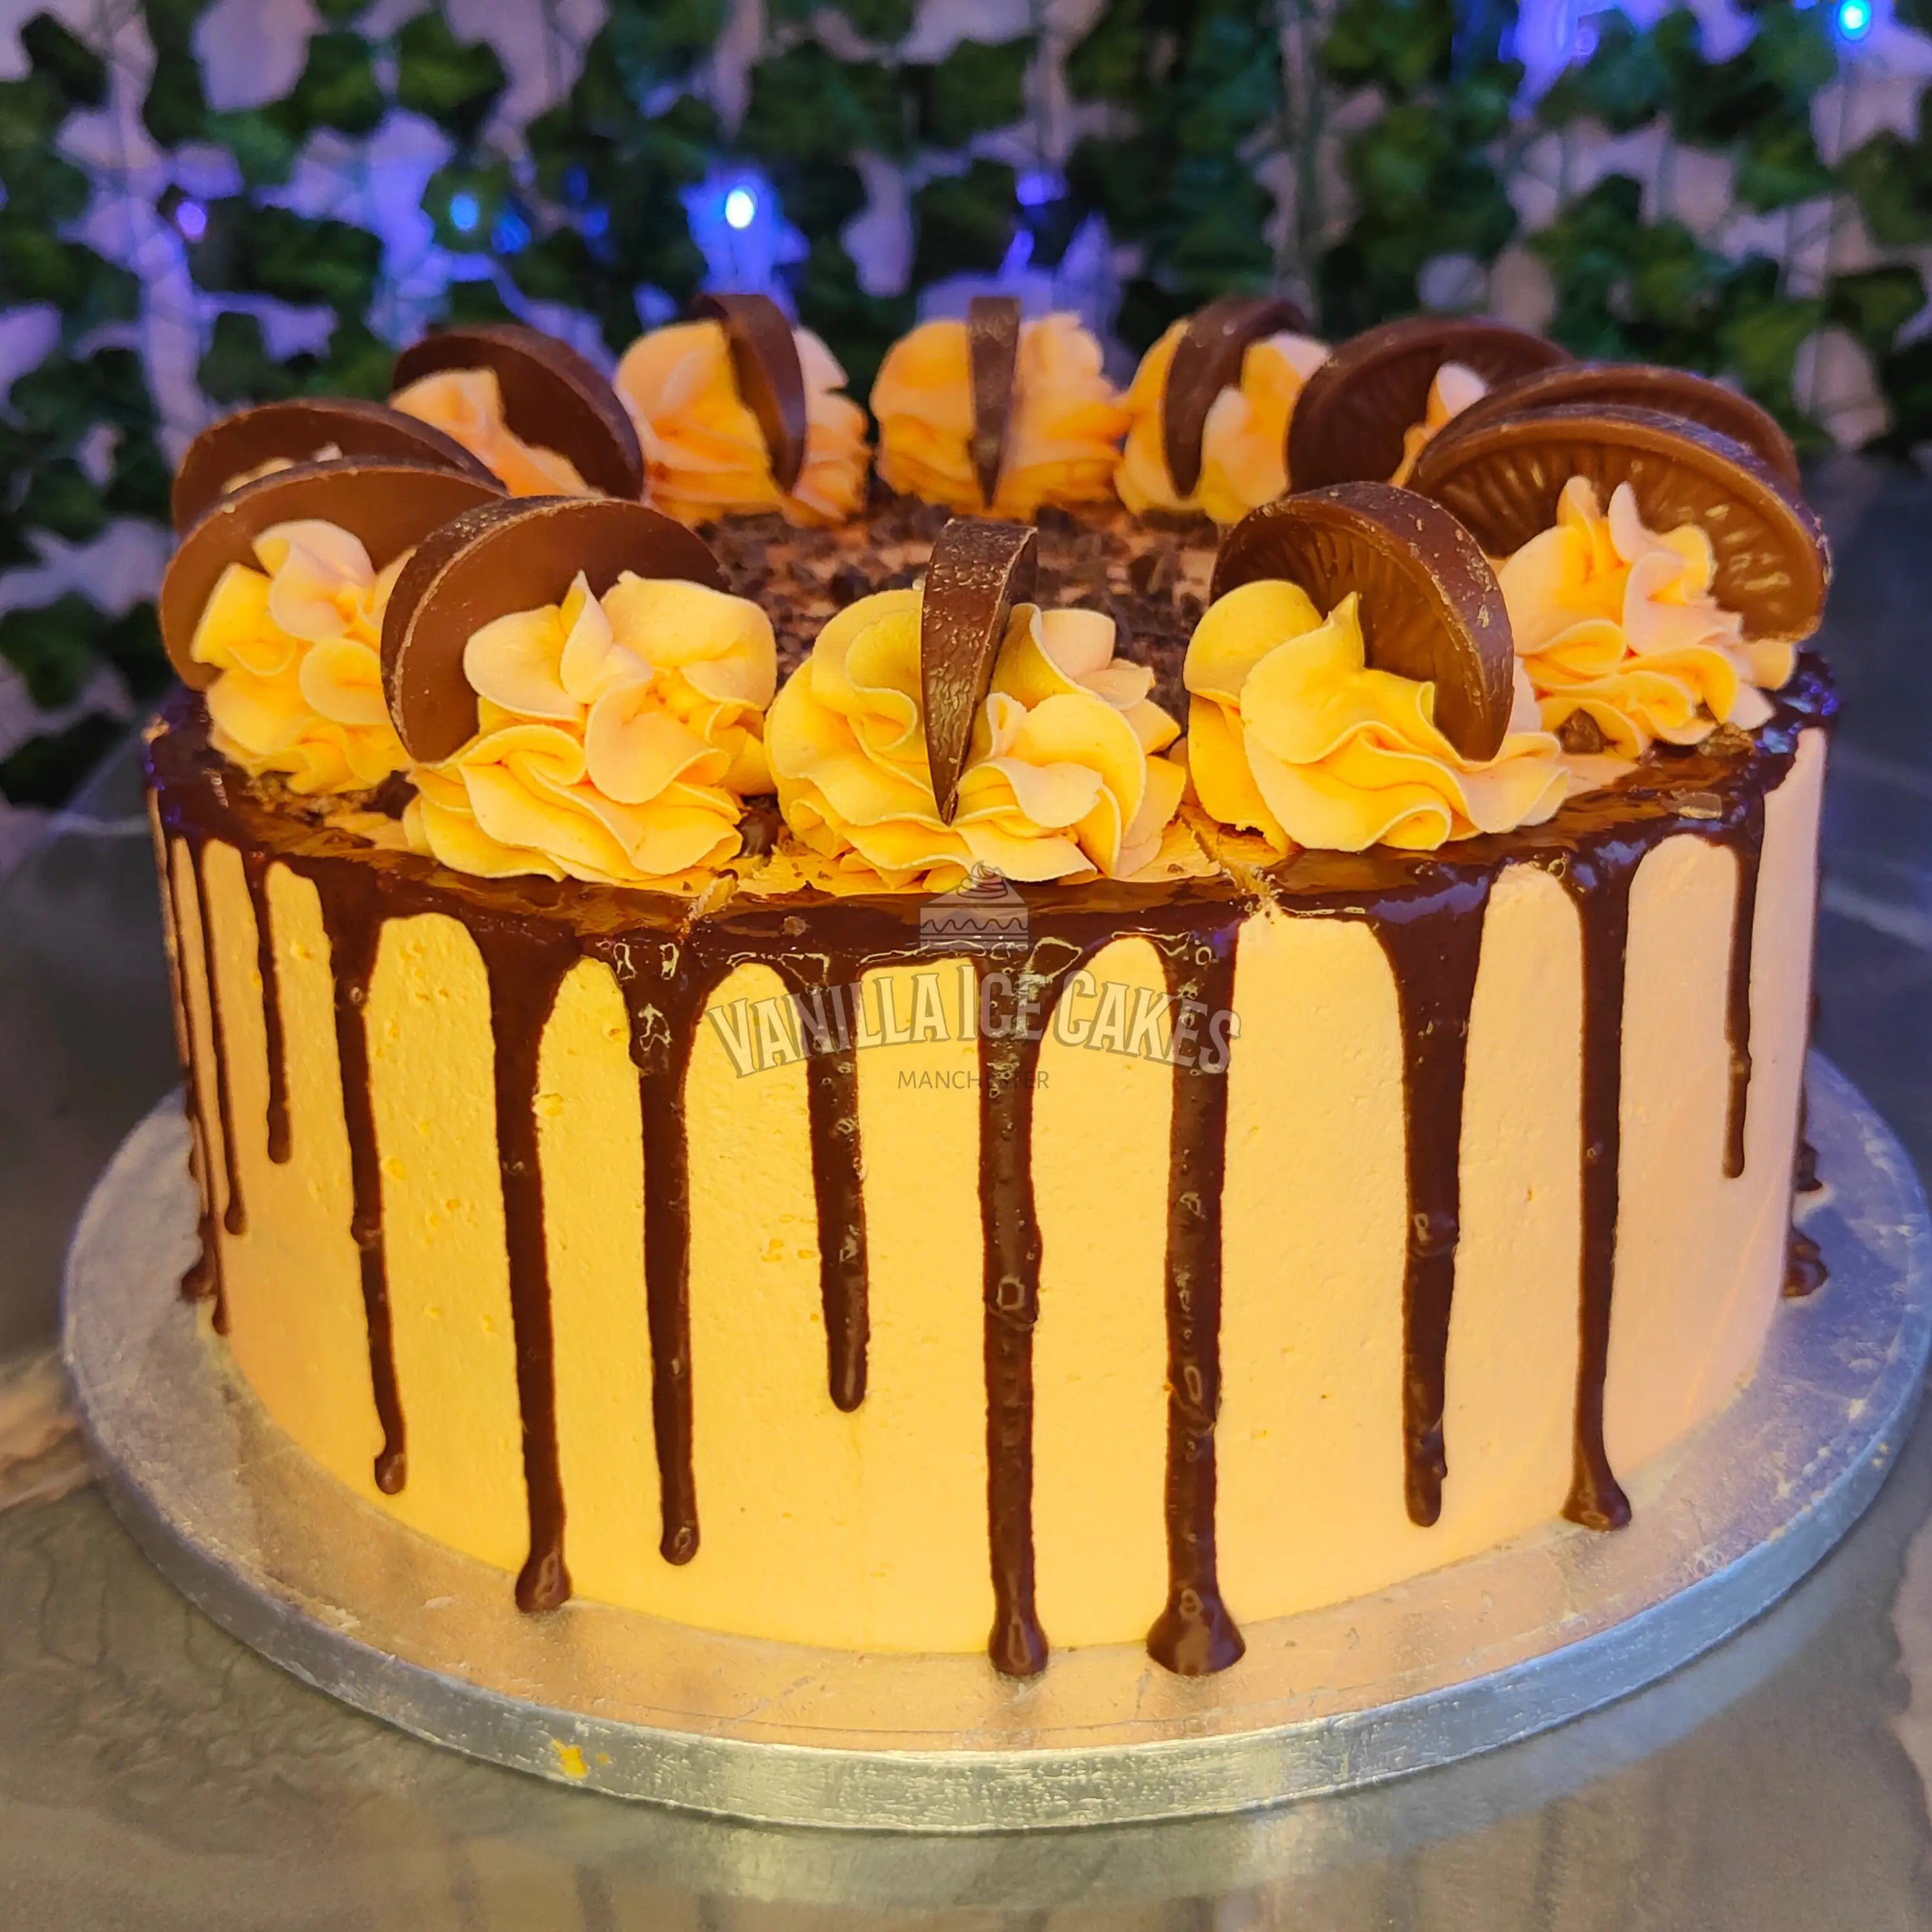 Chocolate Orange Celebration Cake